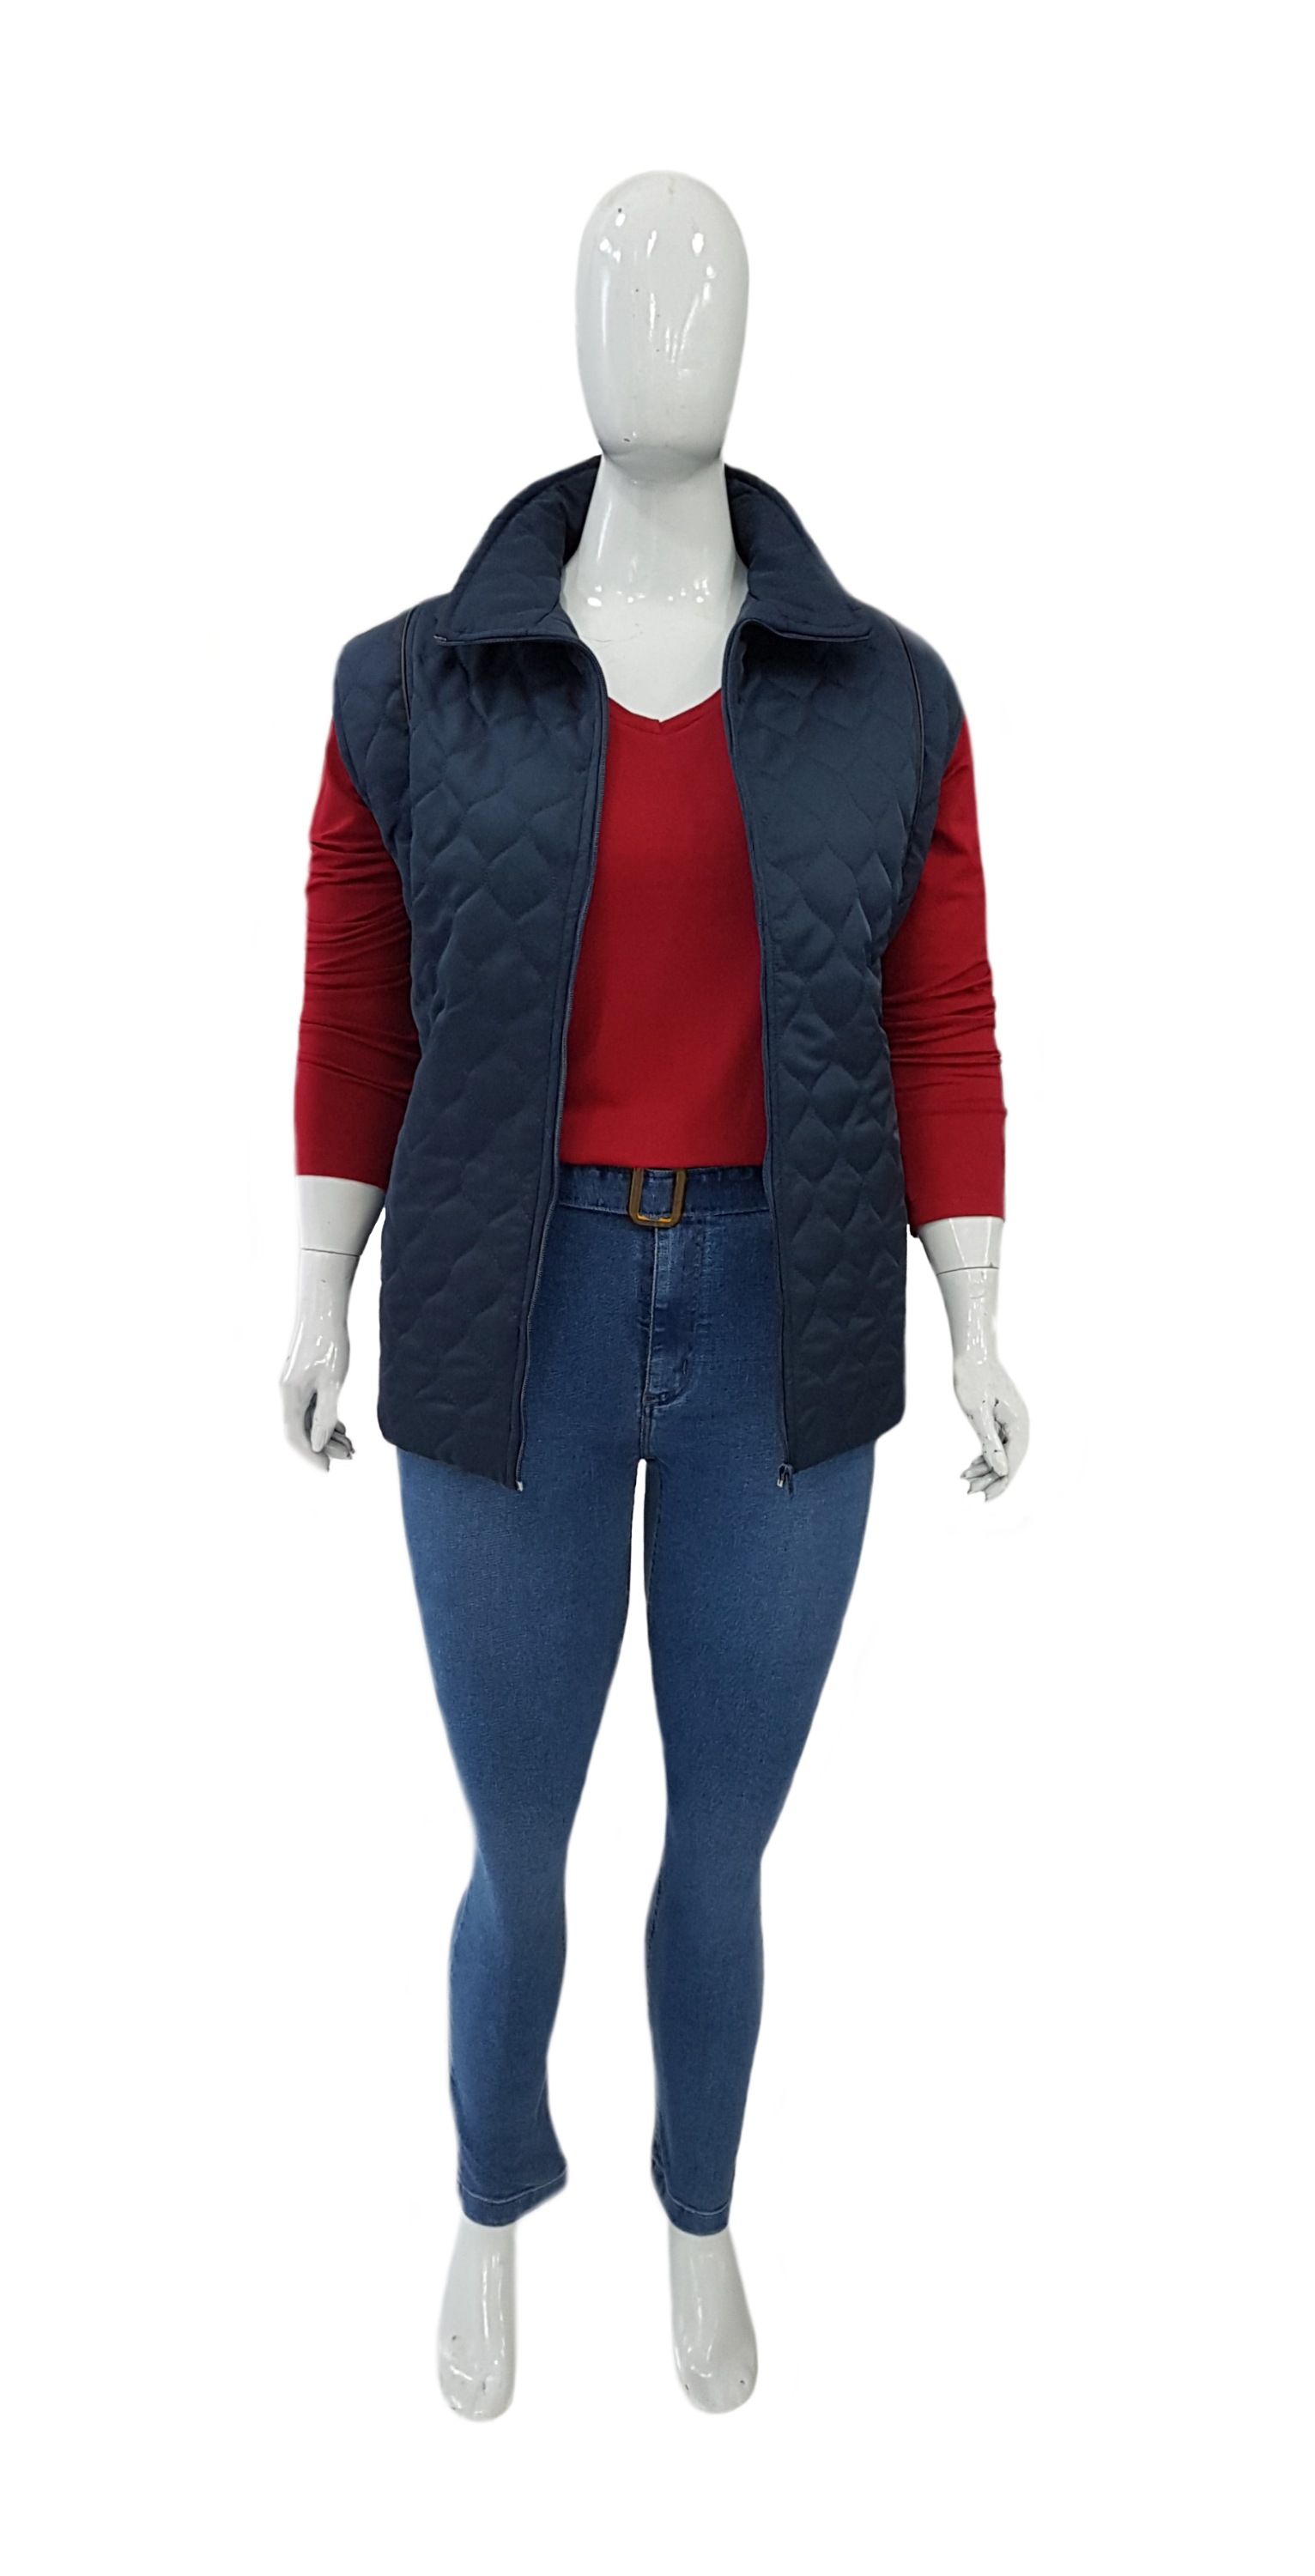 Calça Plus Size Jeans / Sarja com Elastano Ref 03119 / Ref 03282